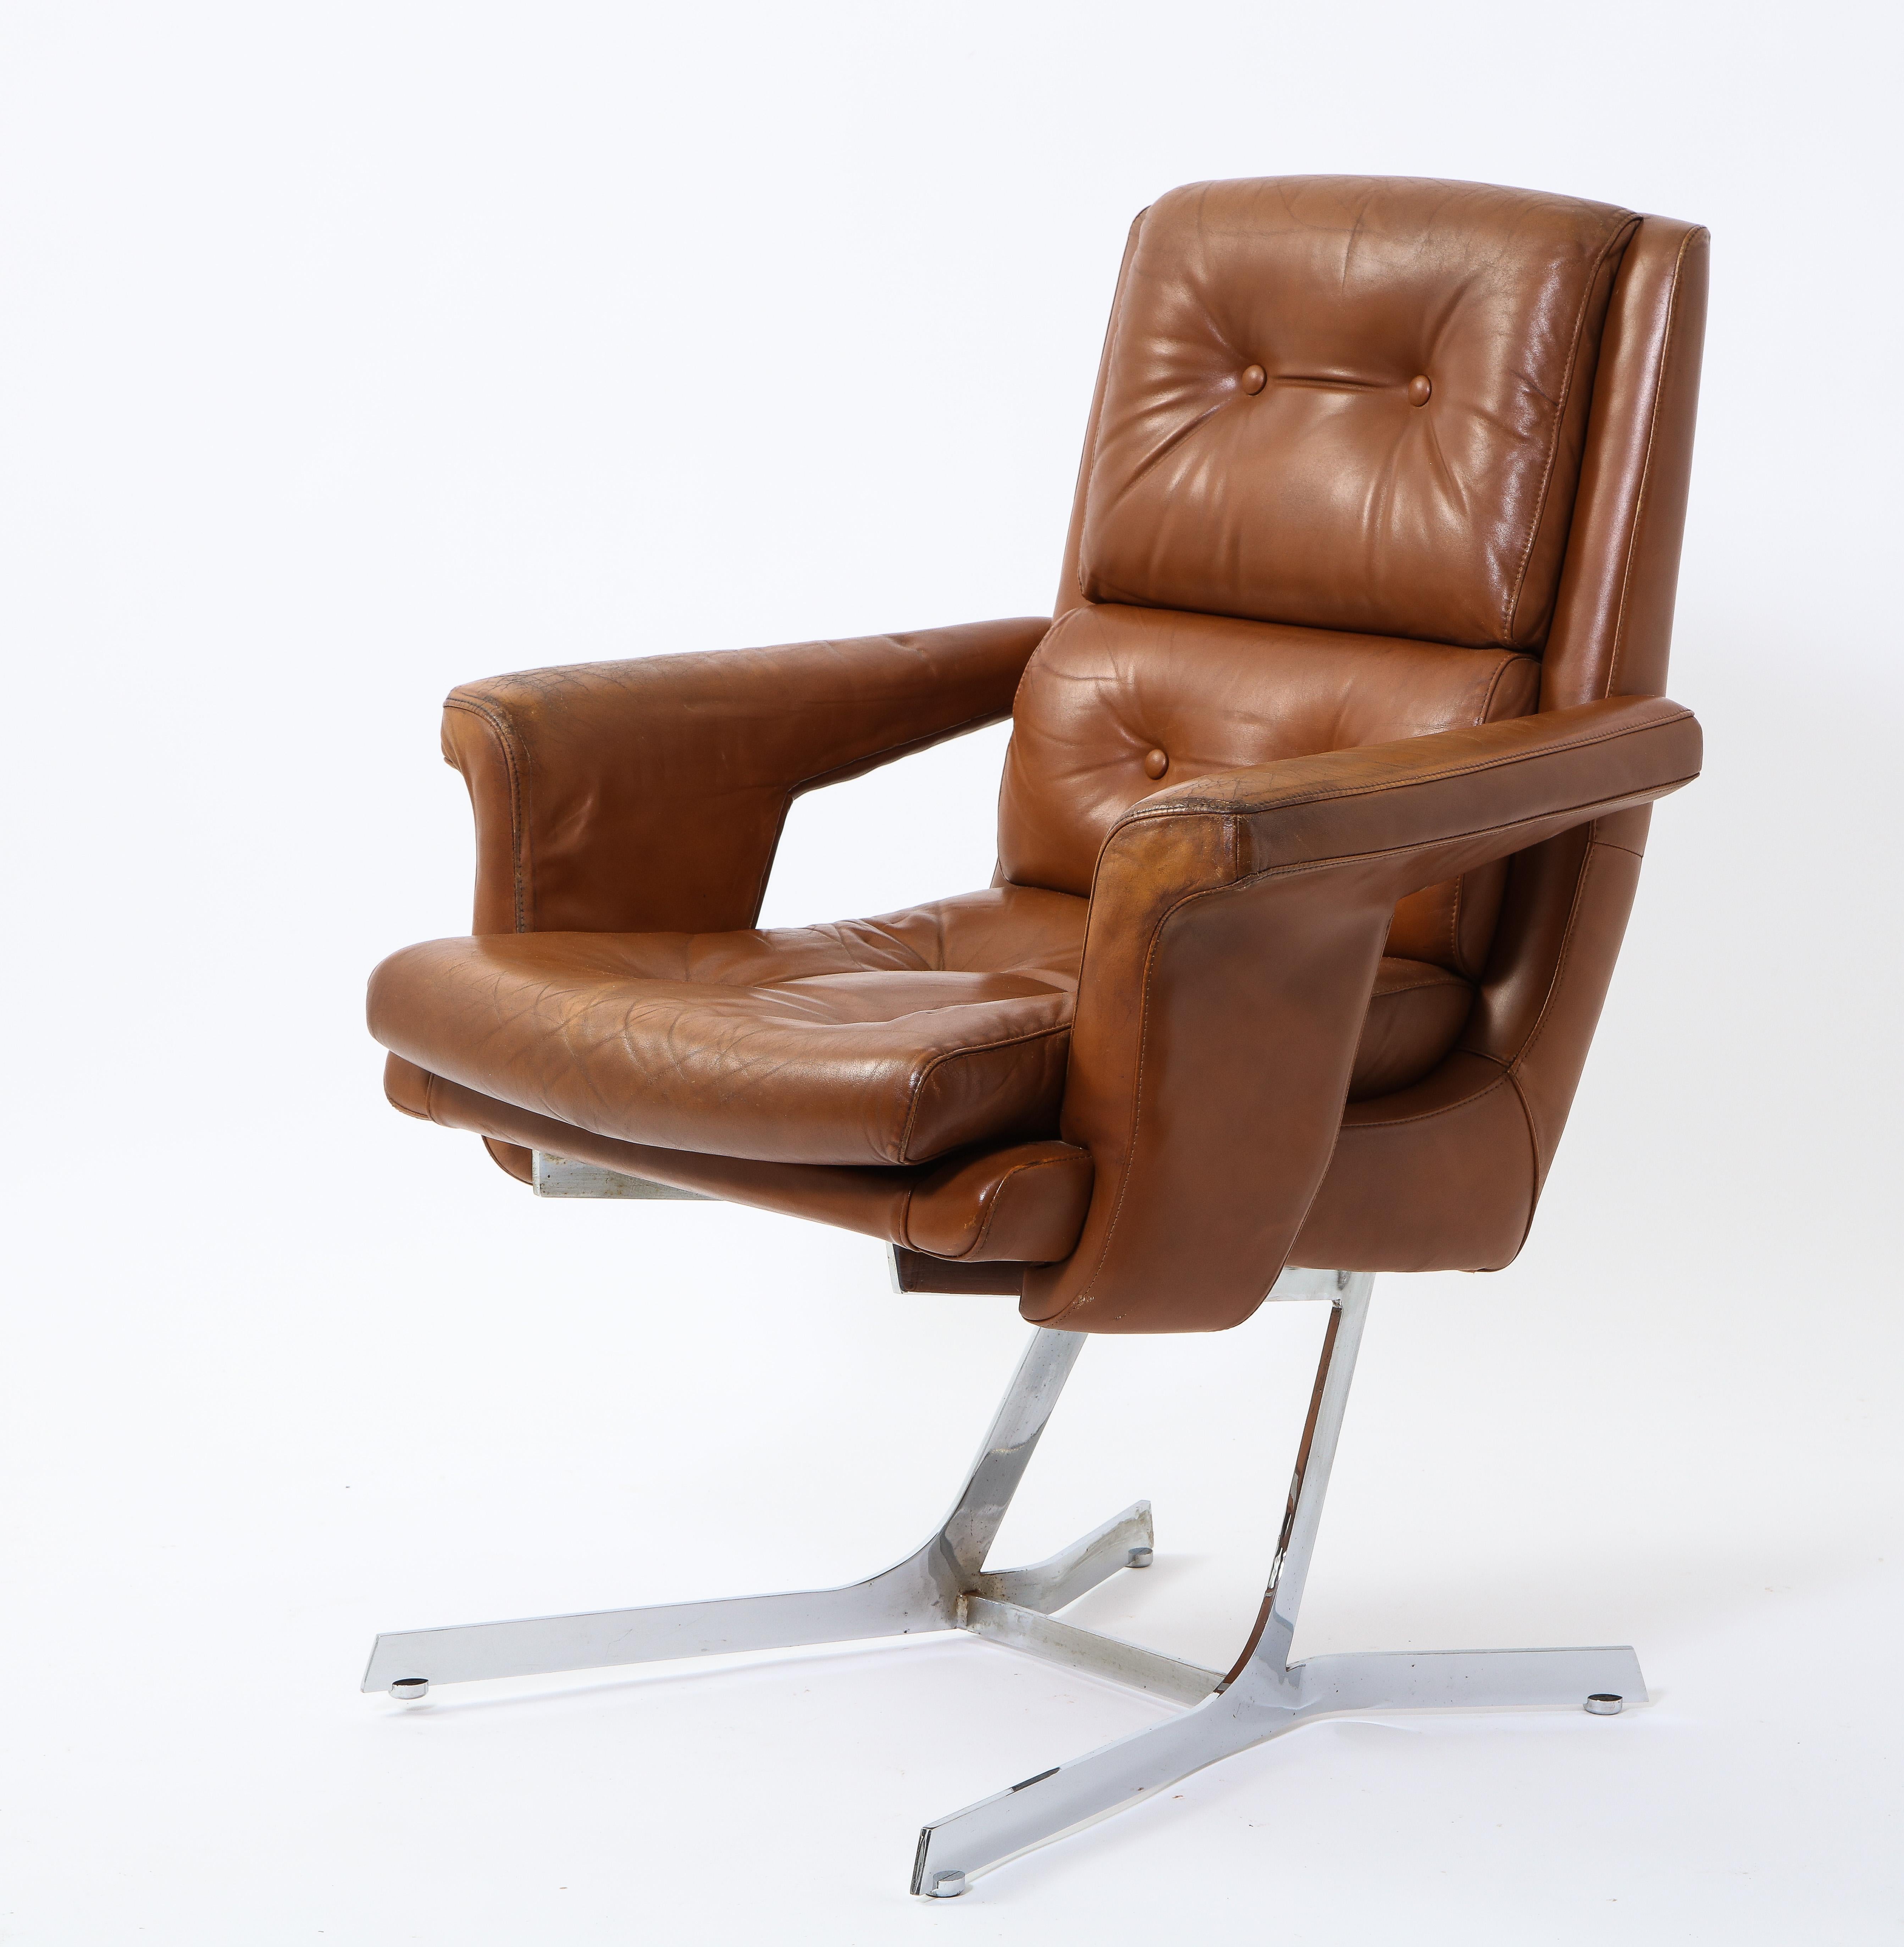 Leleu-Deshaye Leather and Chrome Armchairs, France 1965 For Sale 1